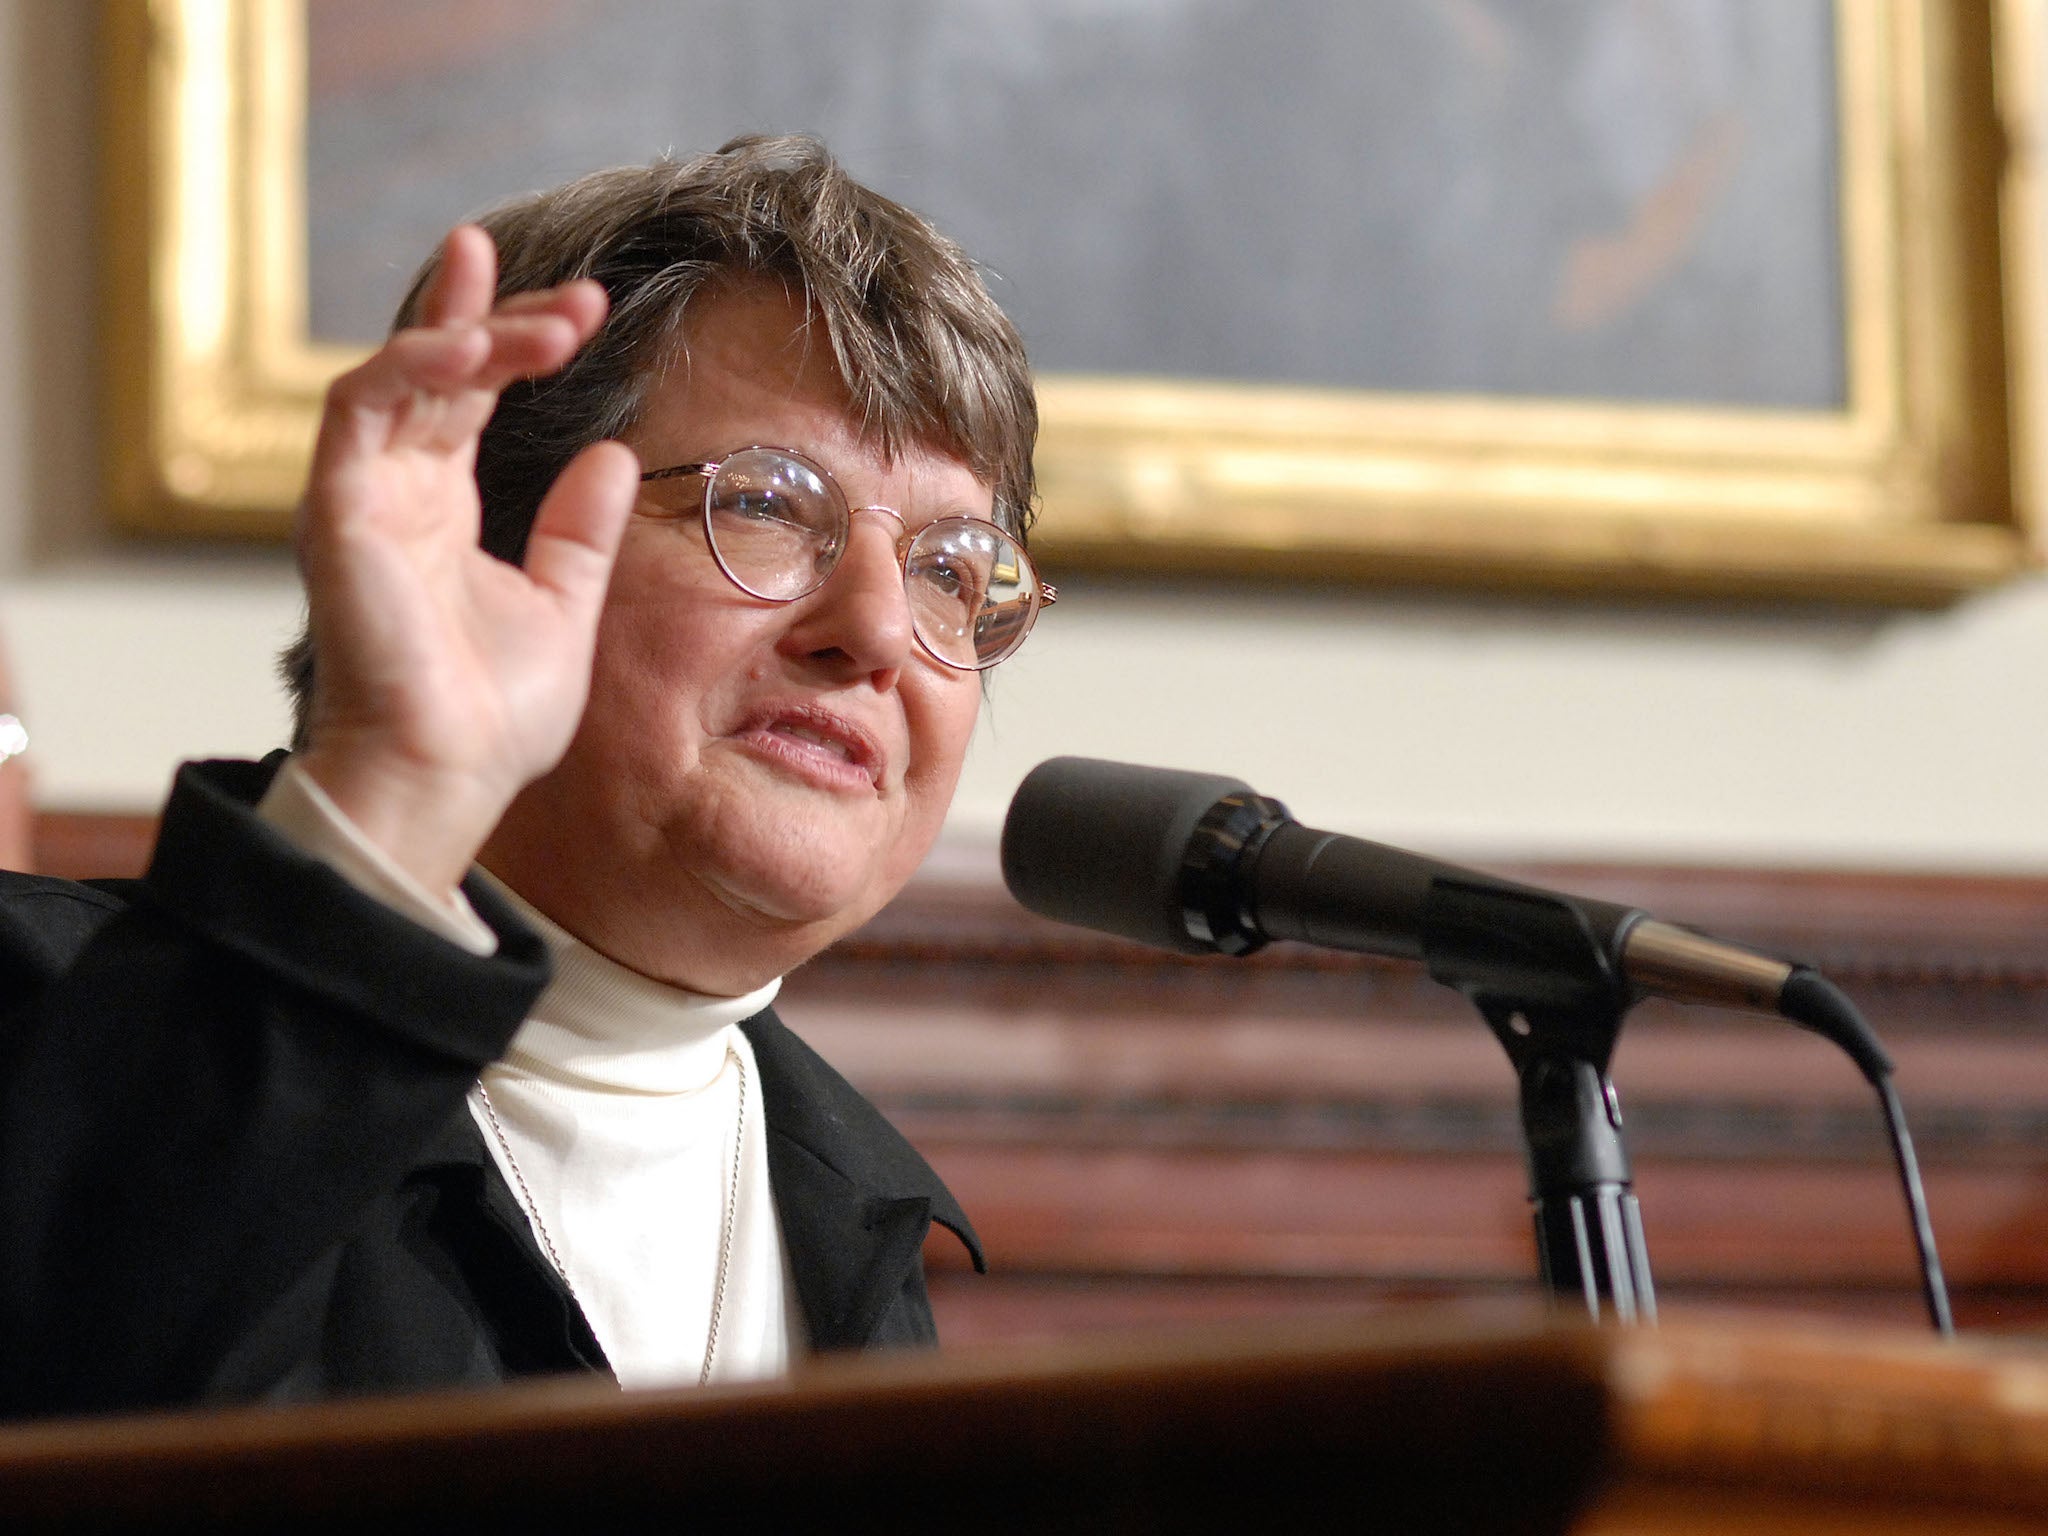 Death penalty abolition activist Sister Helen Prejean